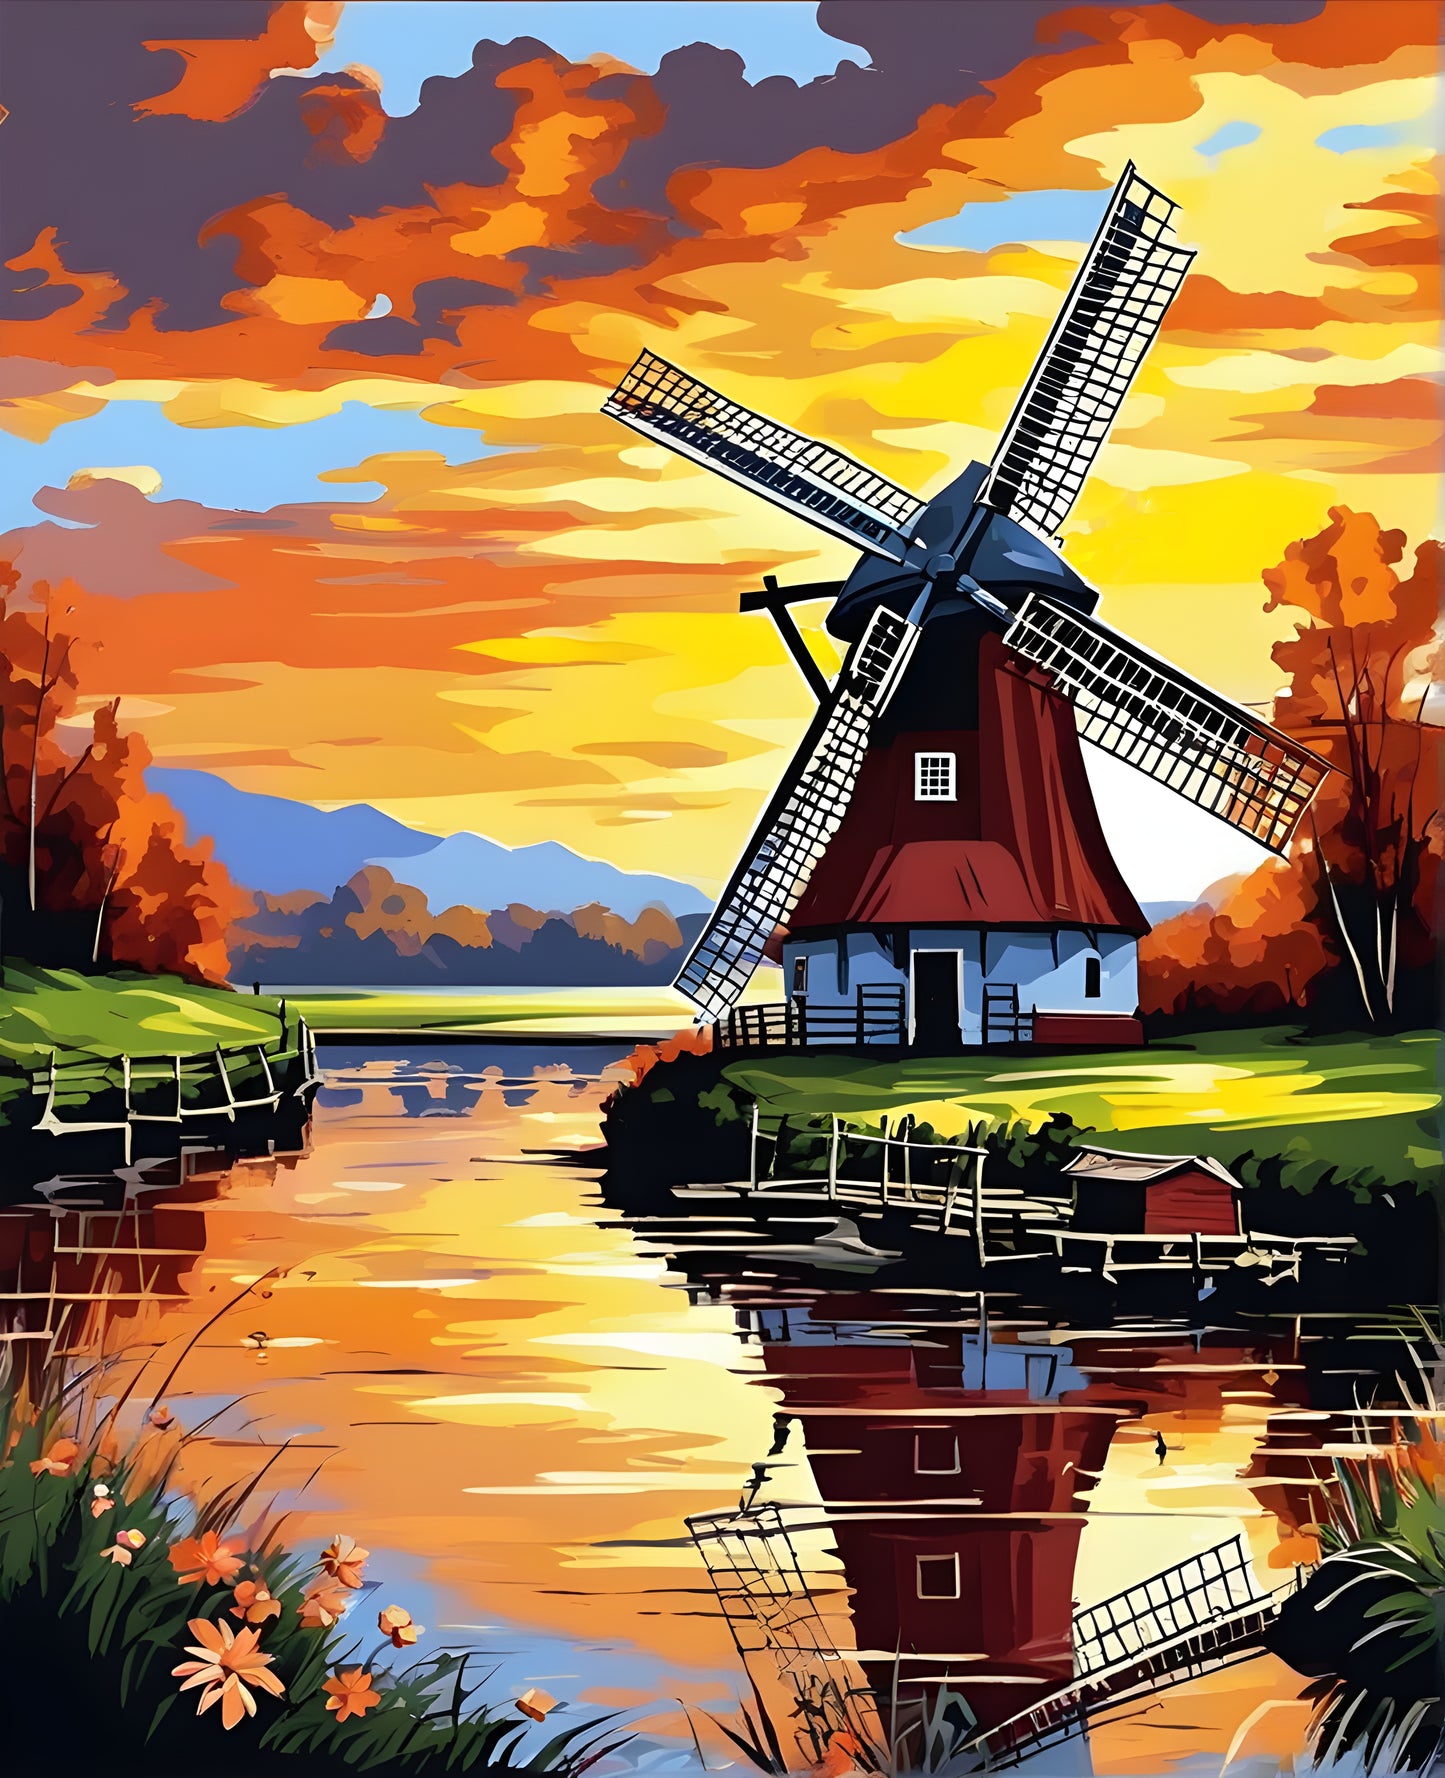 Riverside Windmill Landscape - Van-Go Paint-By-Number Kit